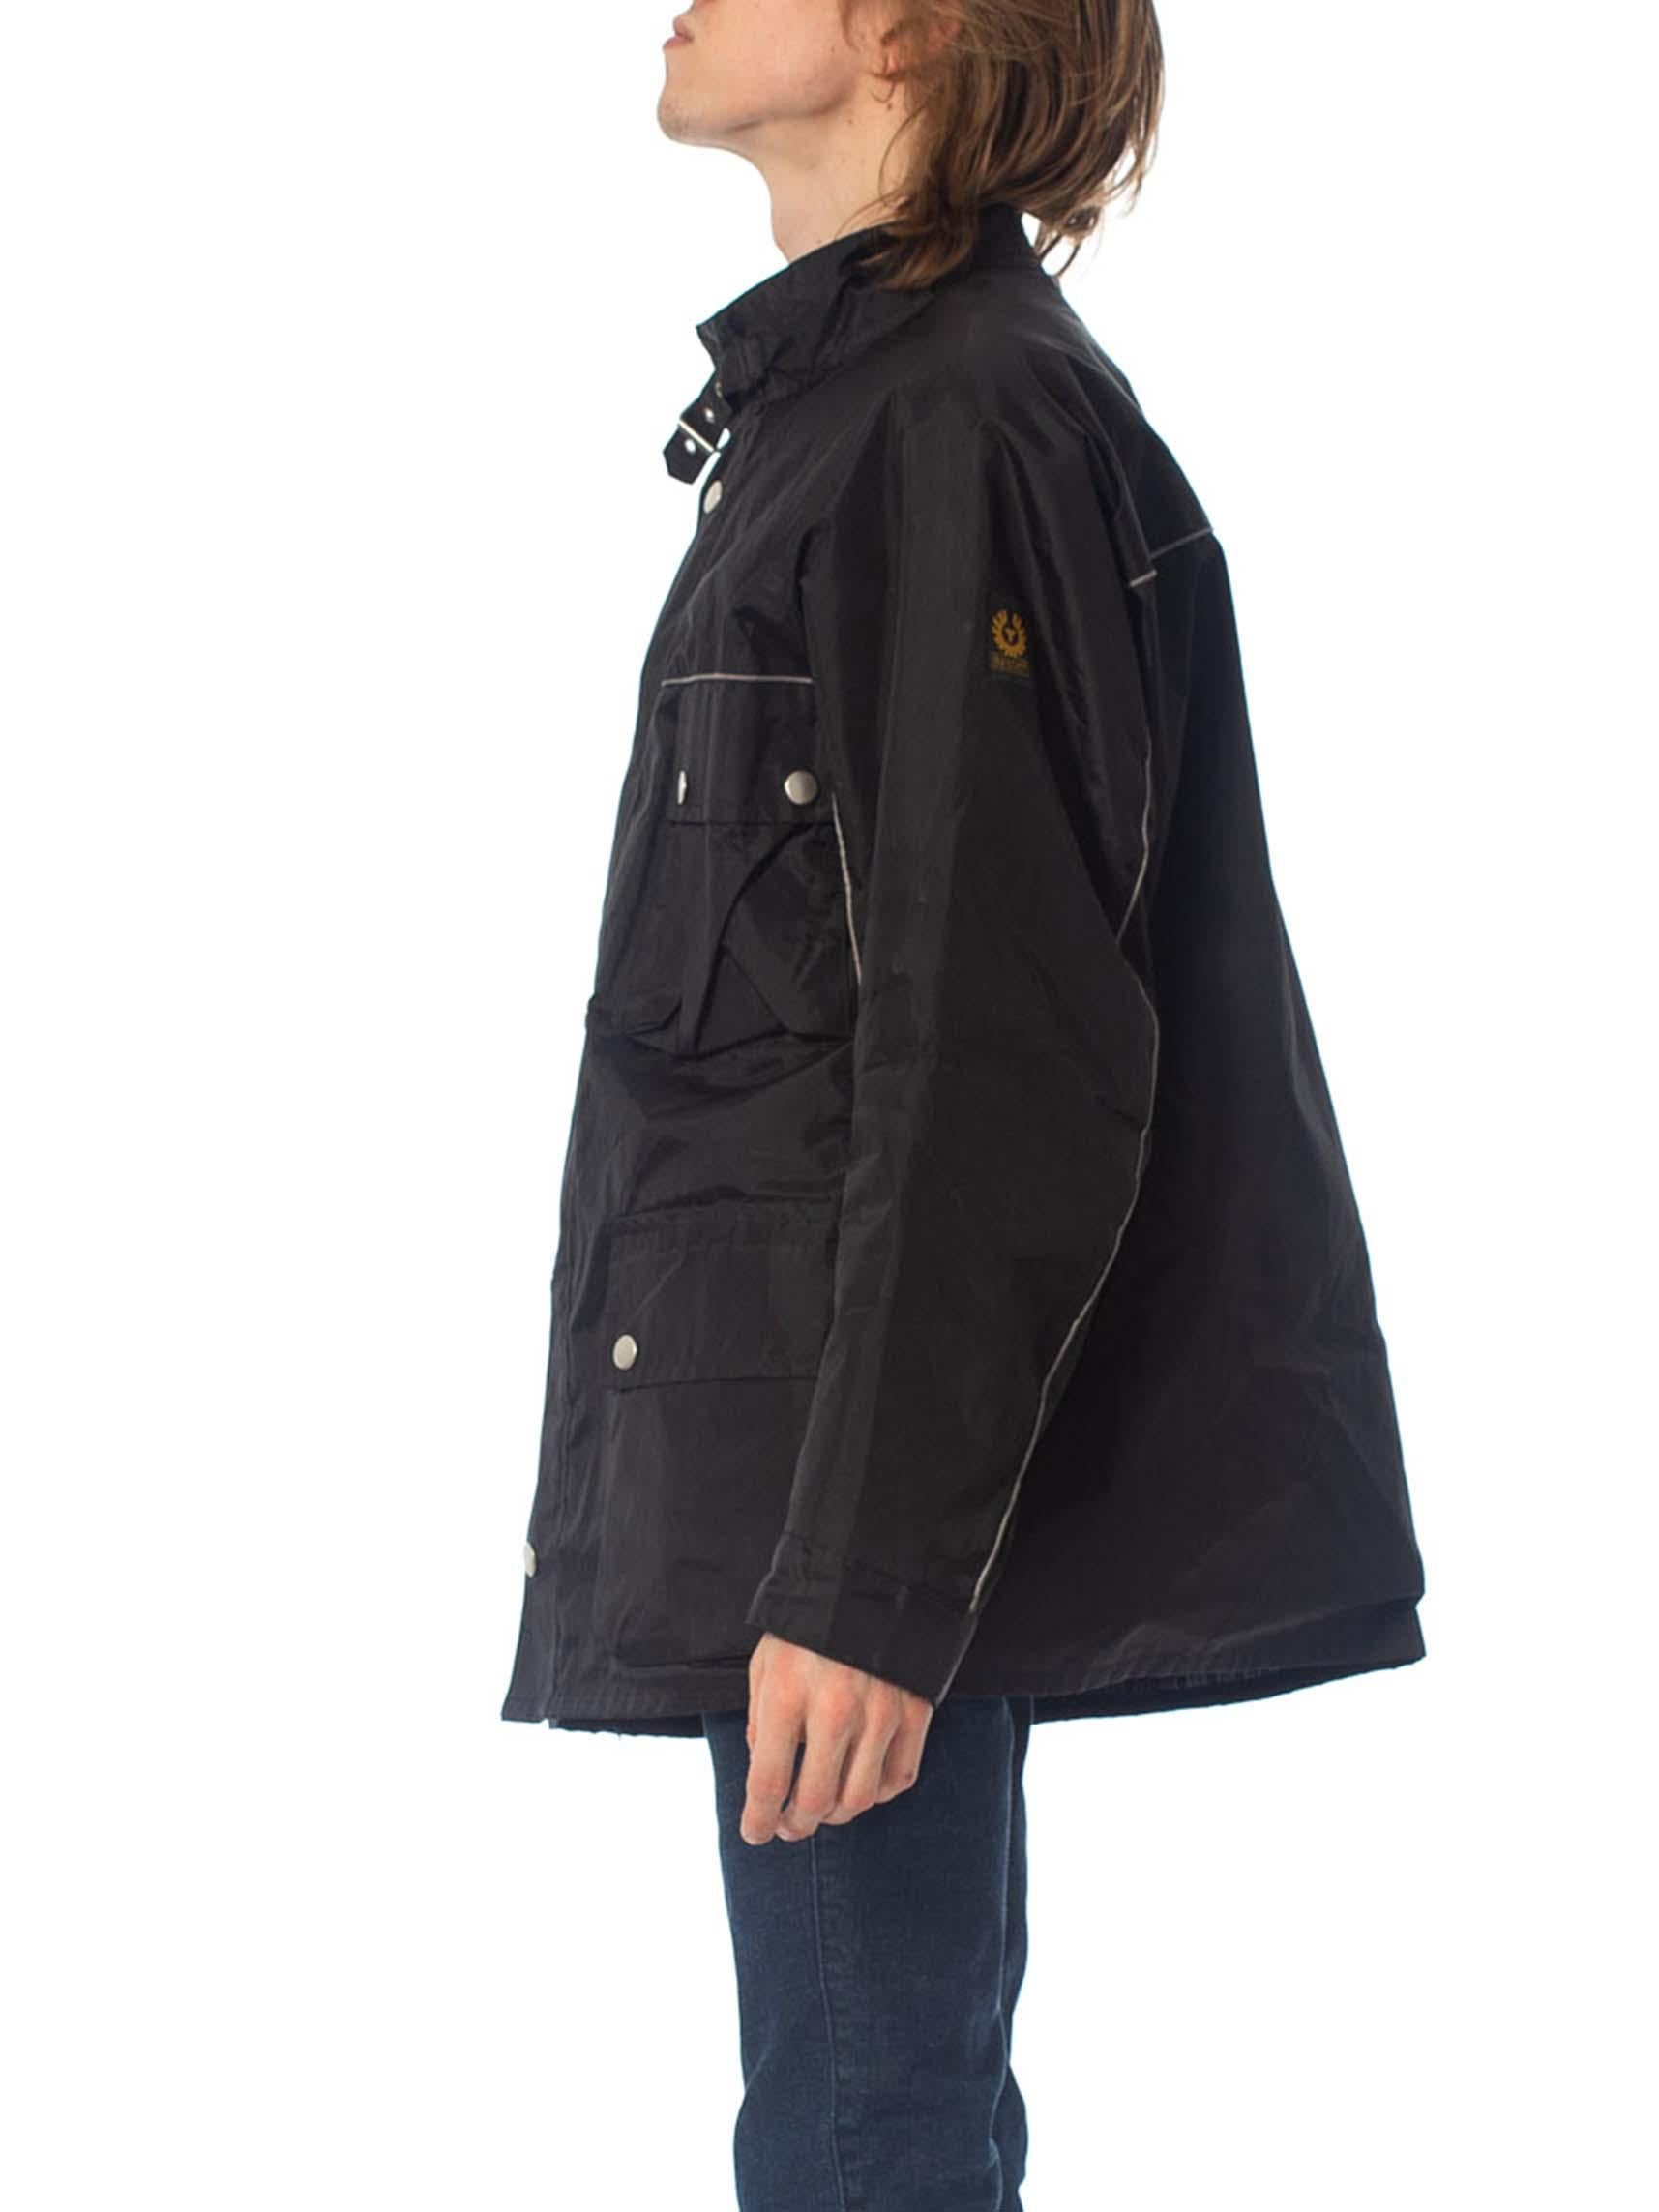 mens black polyester jackets supplier